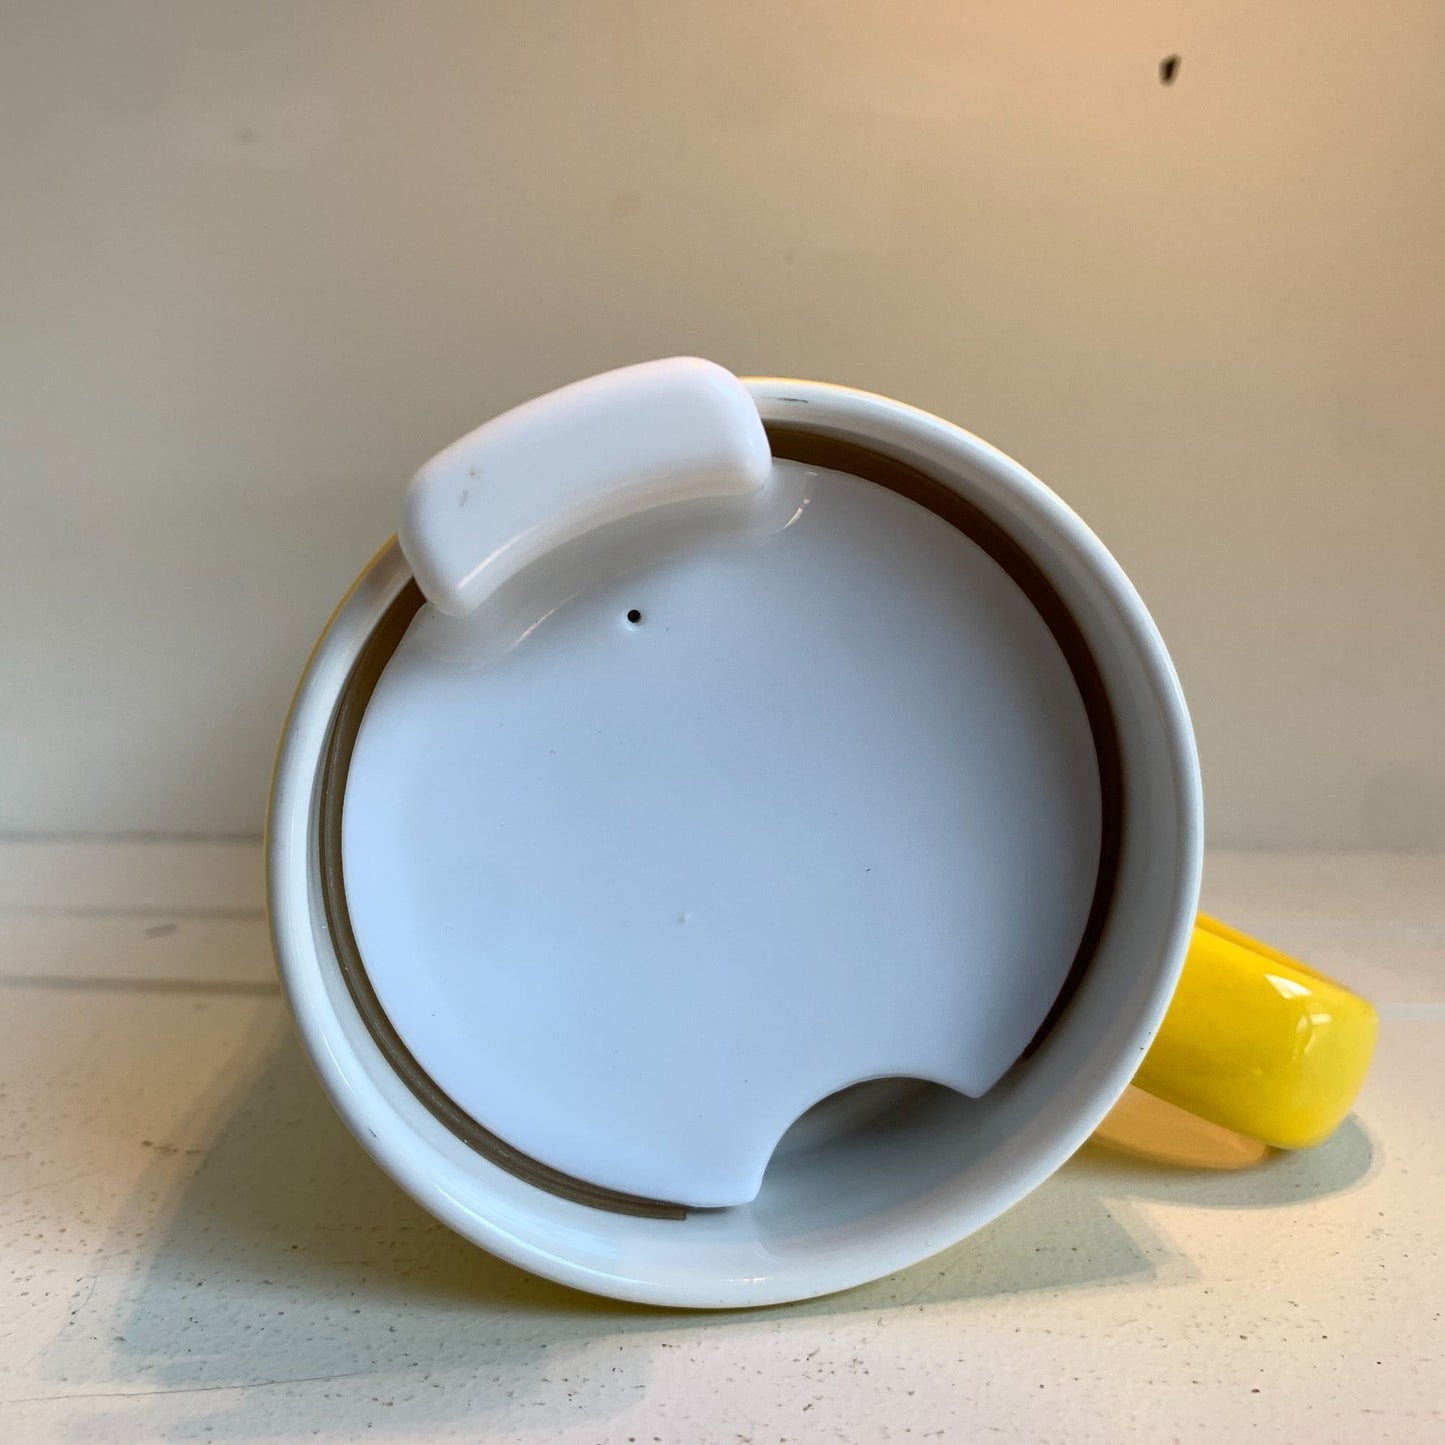 Caribou Coffee 2016 Yellow Teal Travel Mug with Lid